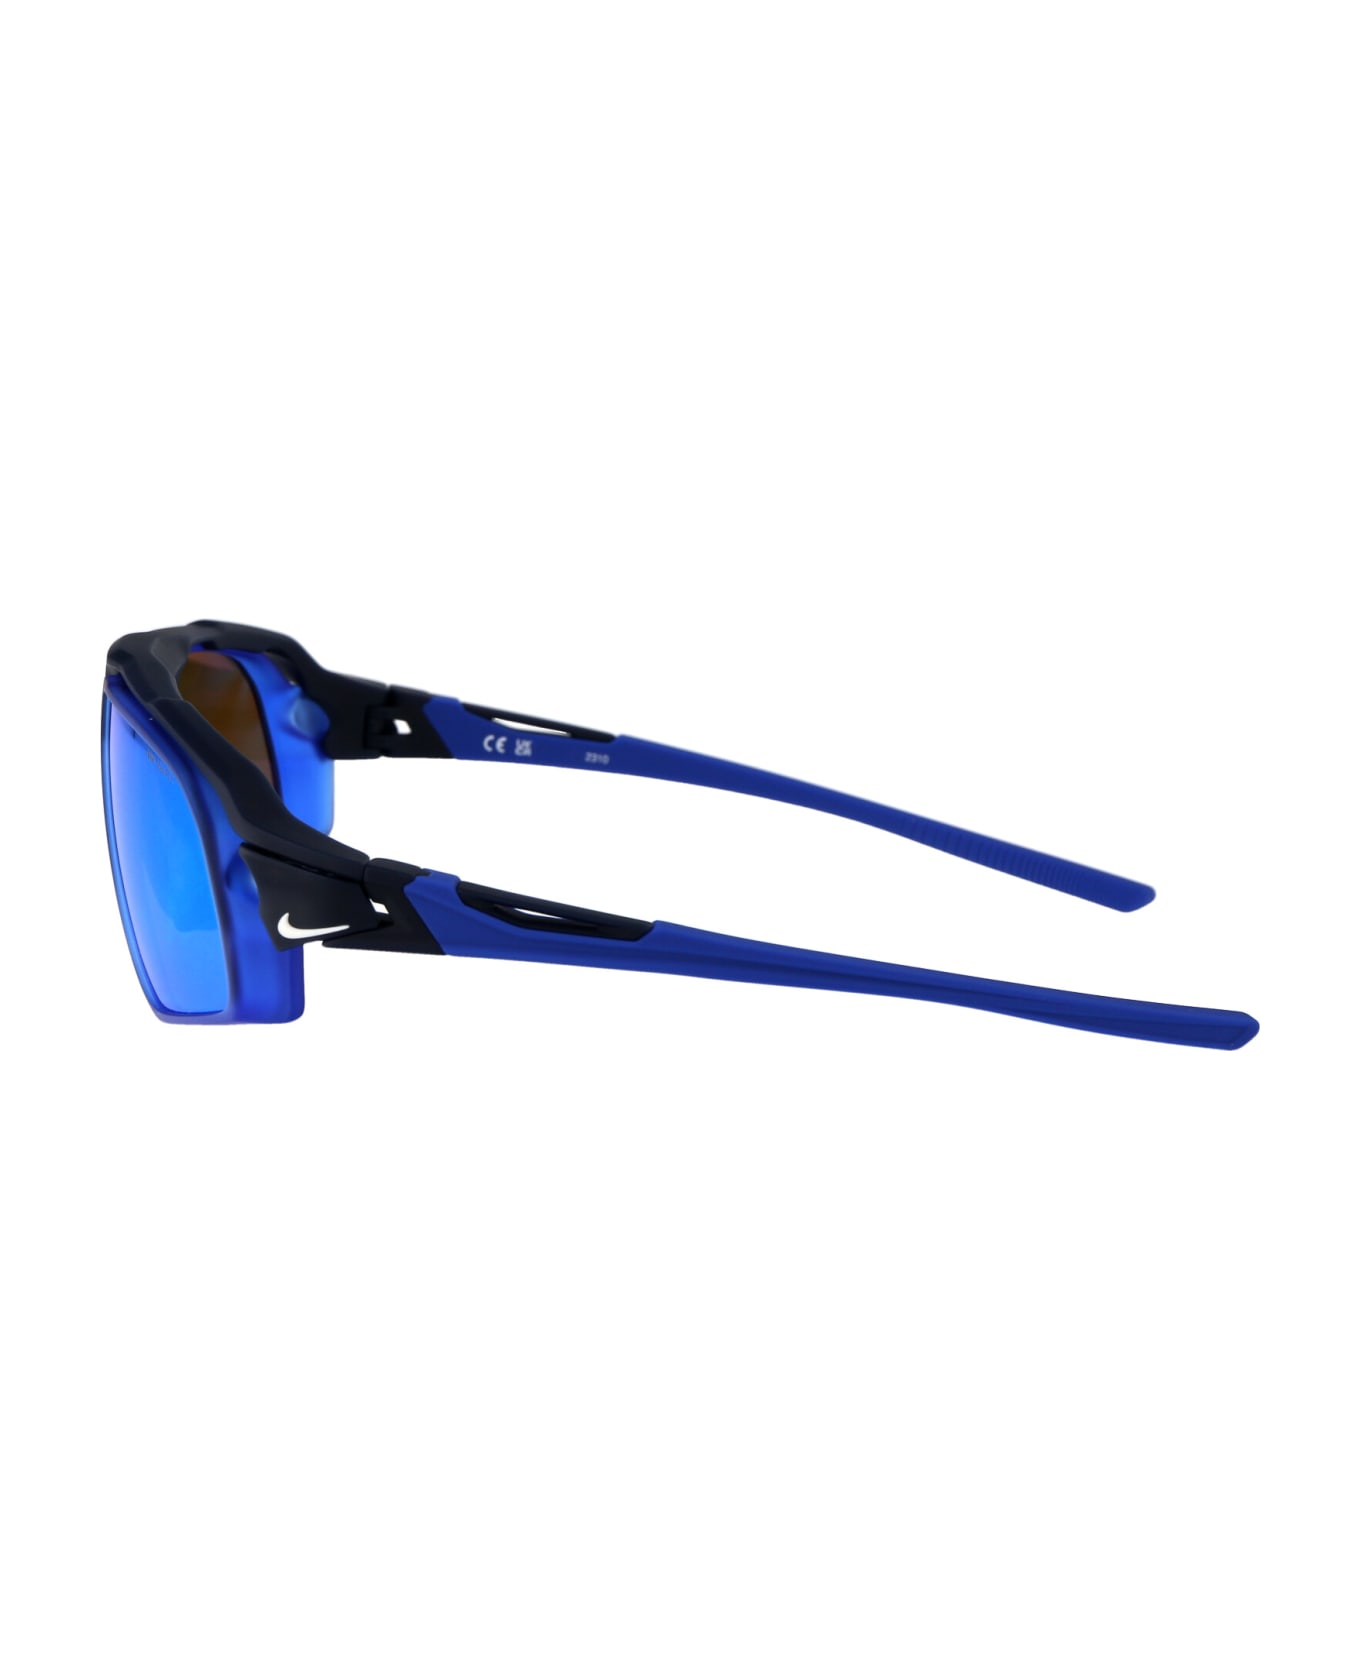 Nike Flyfree M Sunglasses - 410 BLUE MIRROR MATTE NAVY サングラス